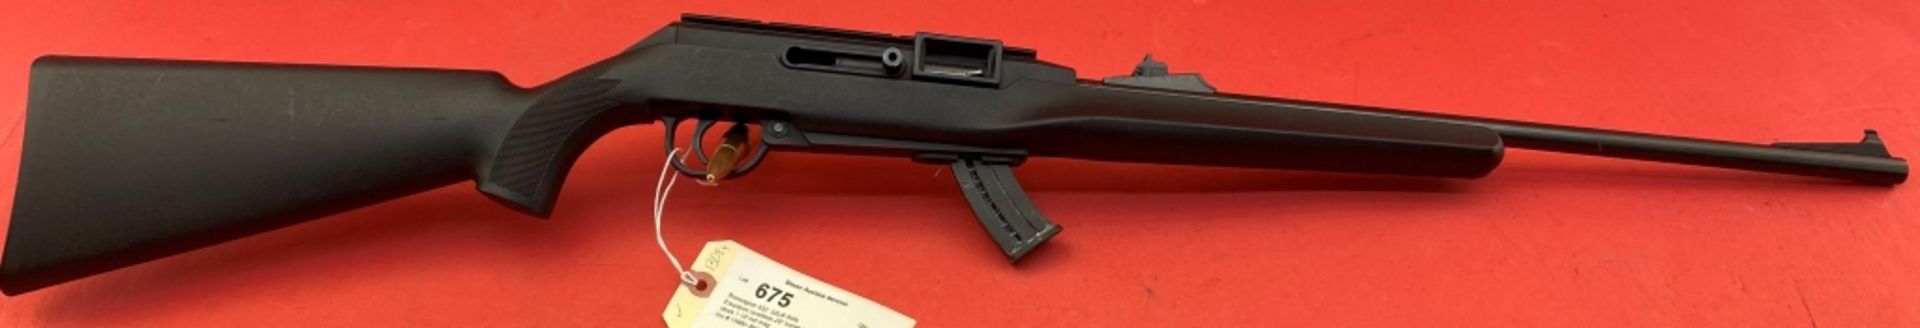 Remington 522 .22LR Rifle